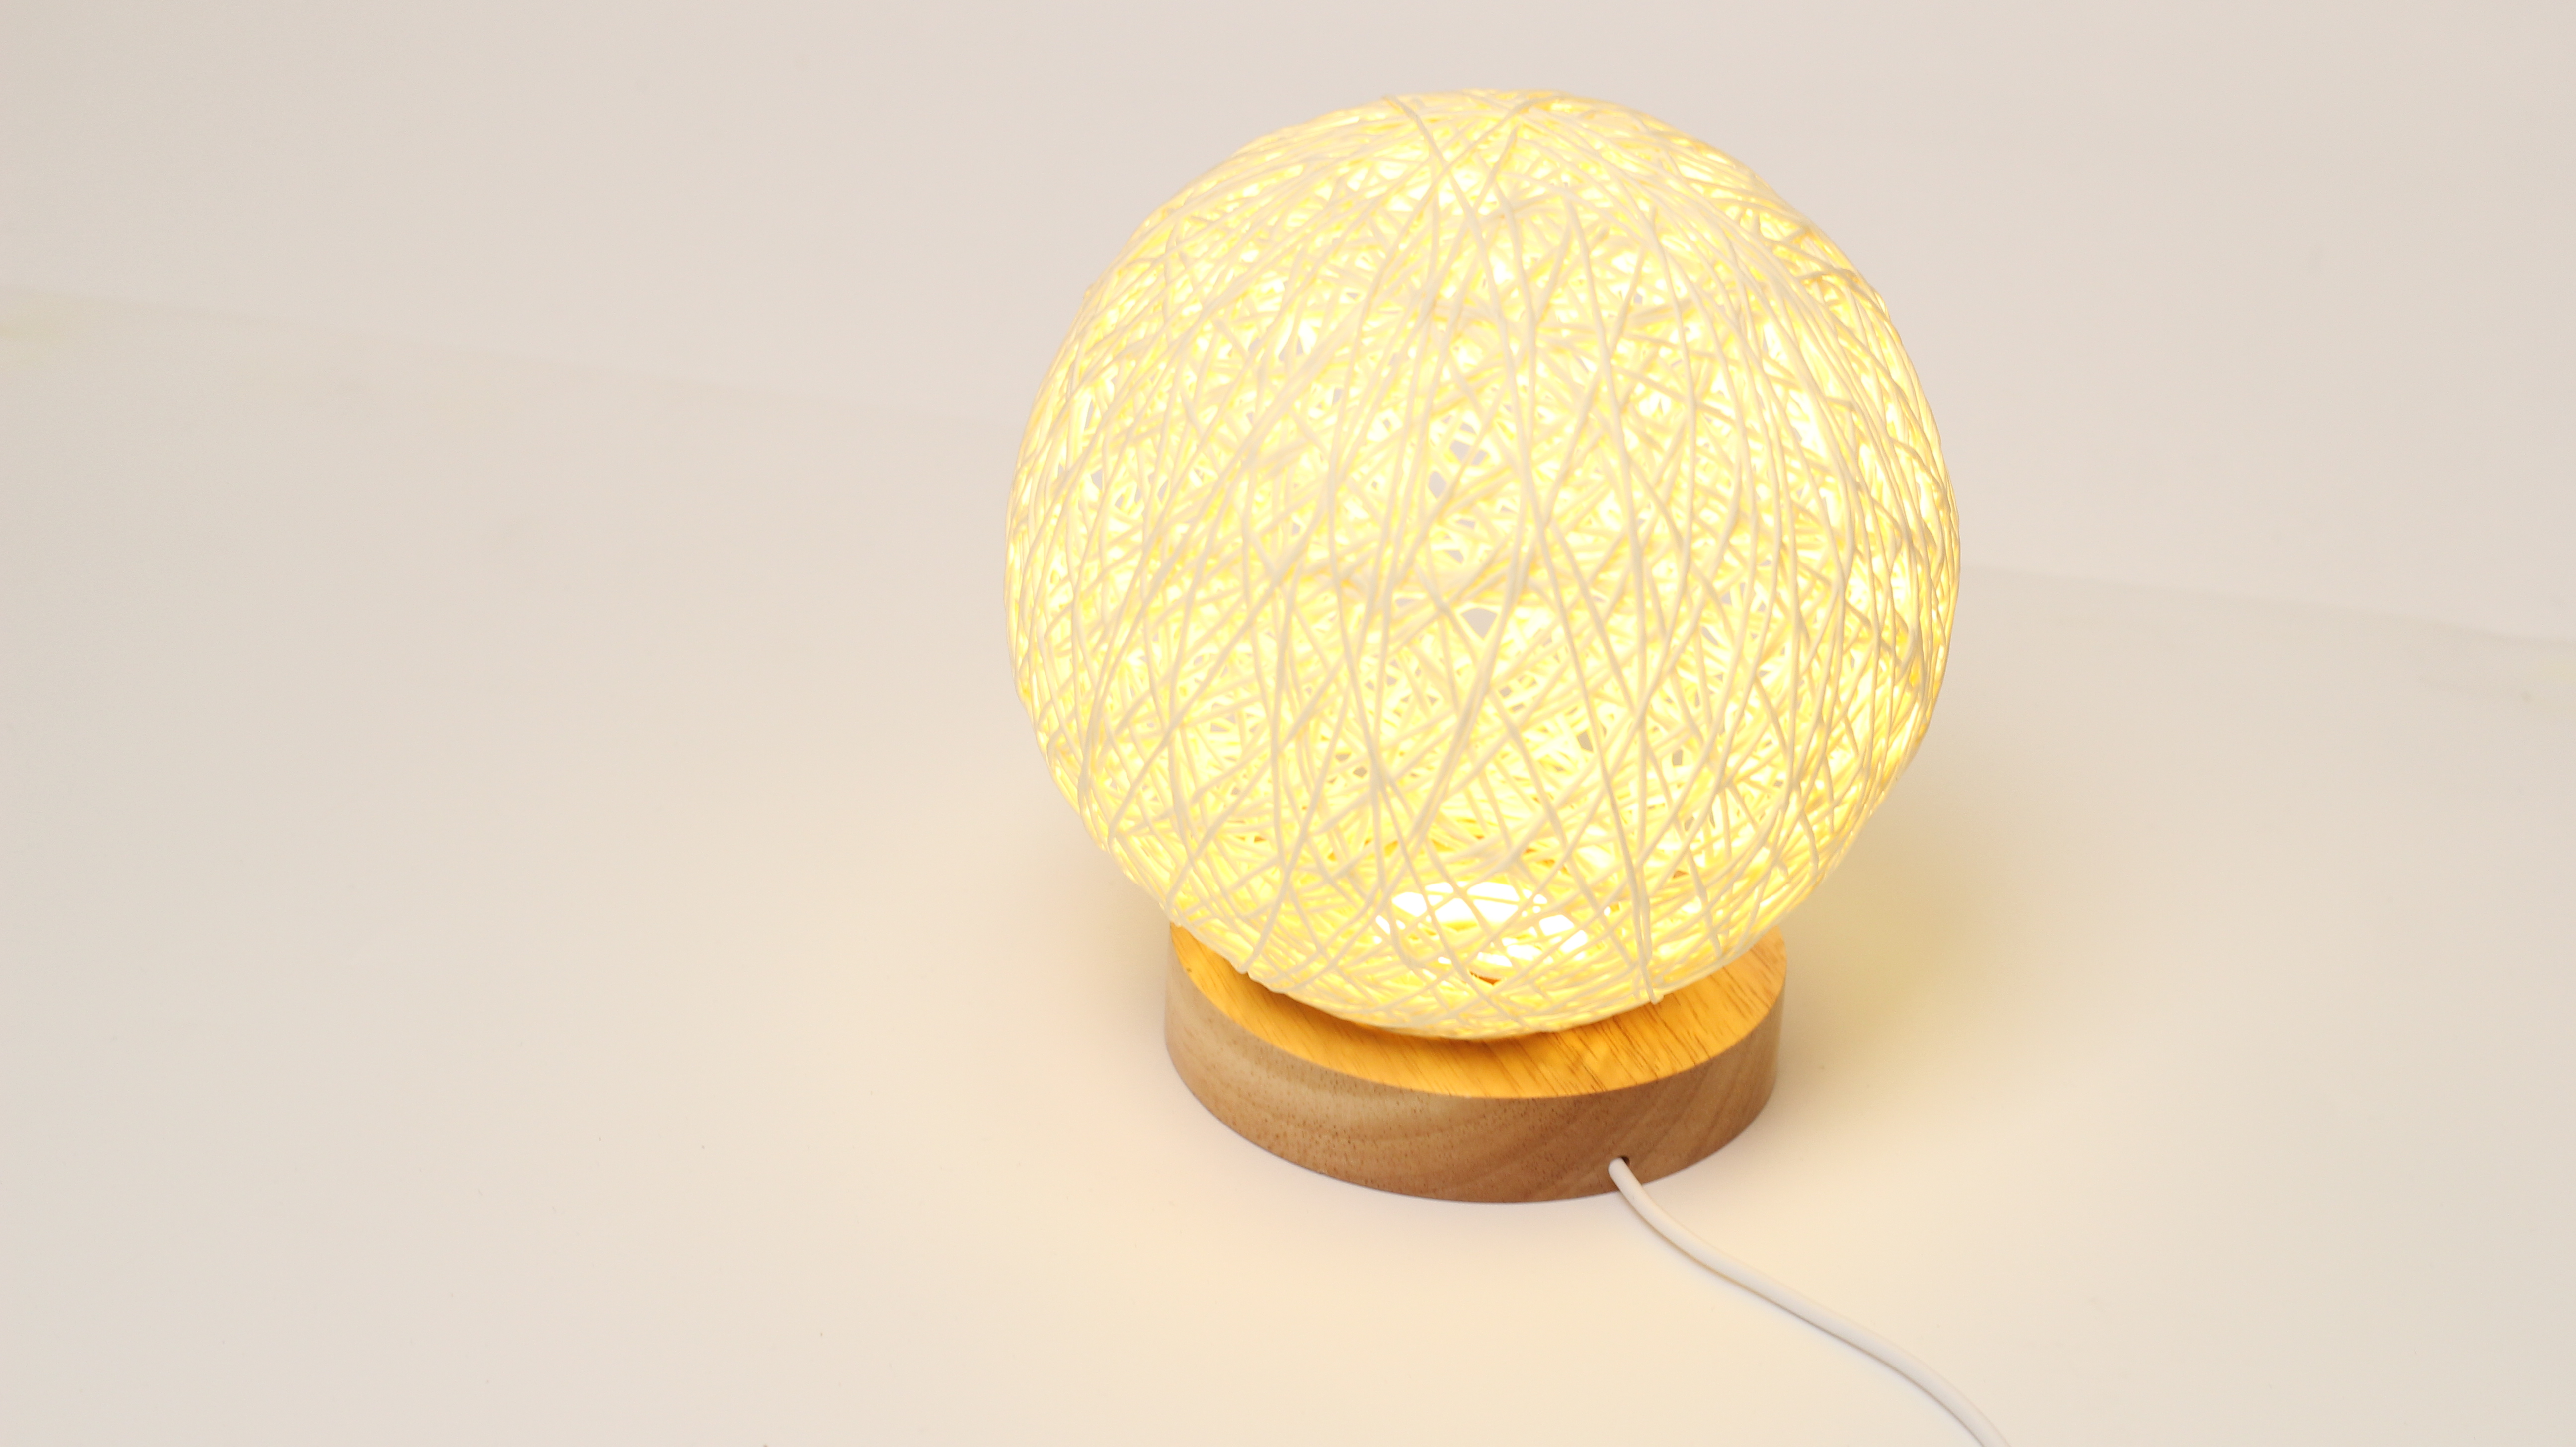 L Wooden LED crystal round lamp holder